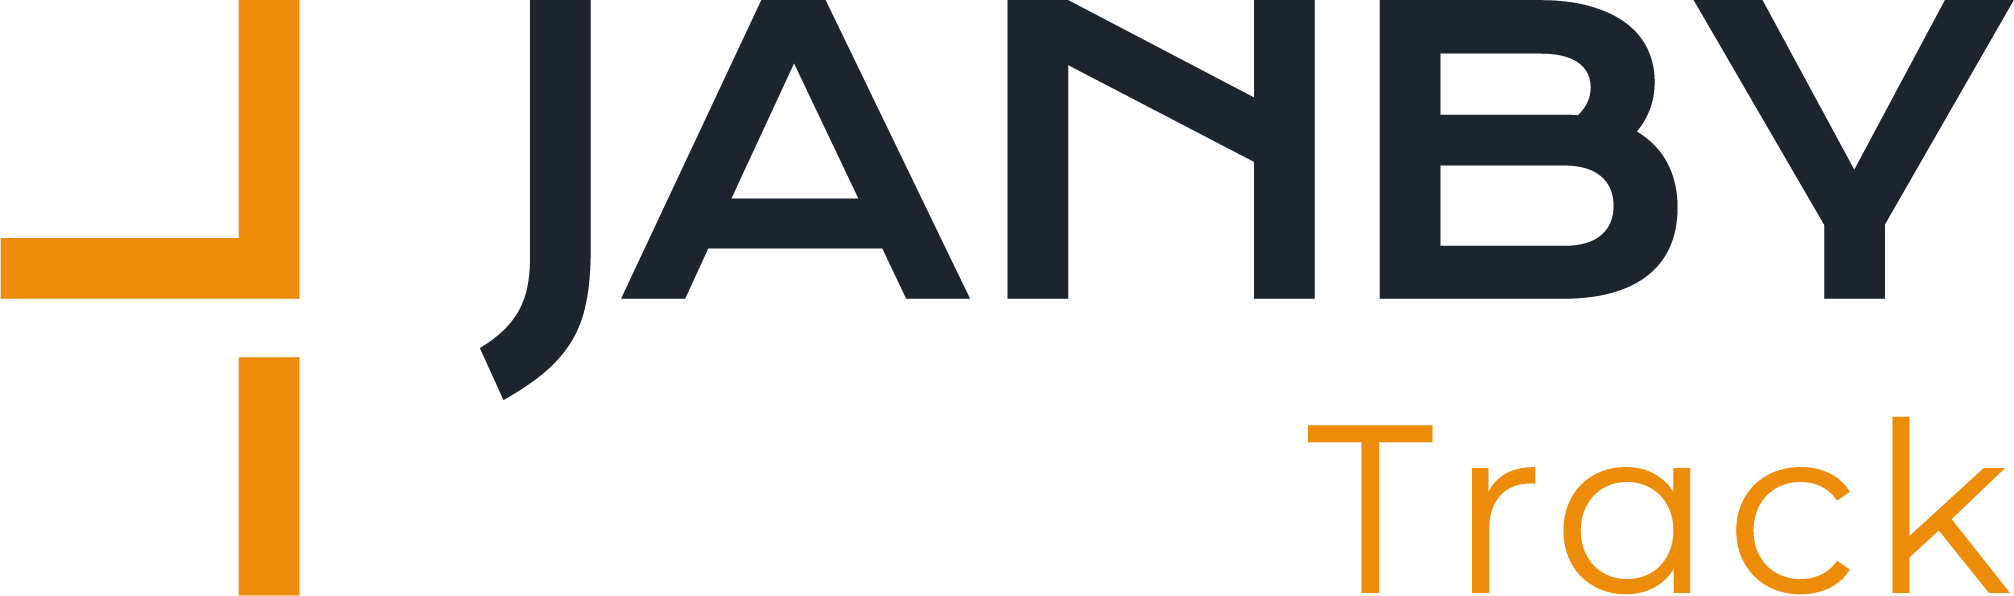 JANBY Track Logo